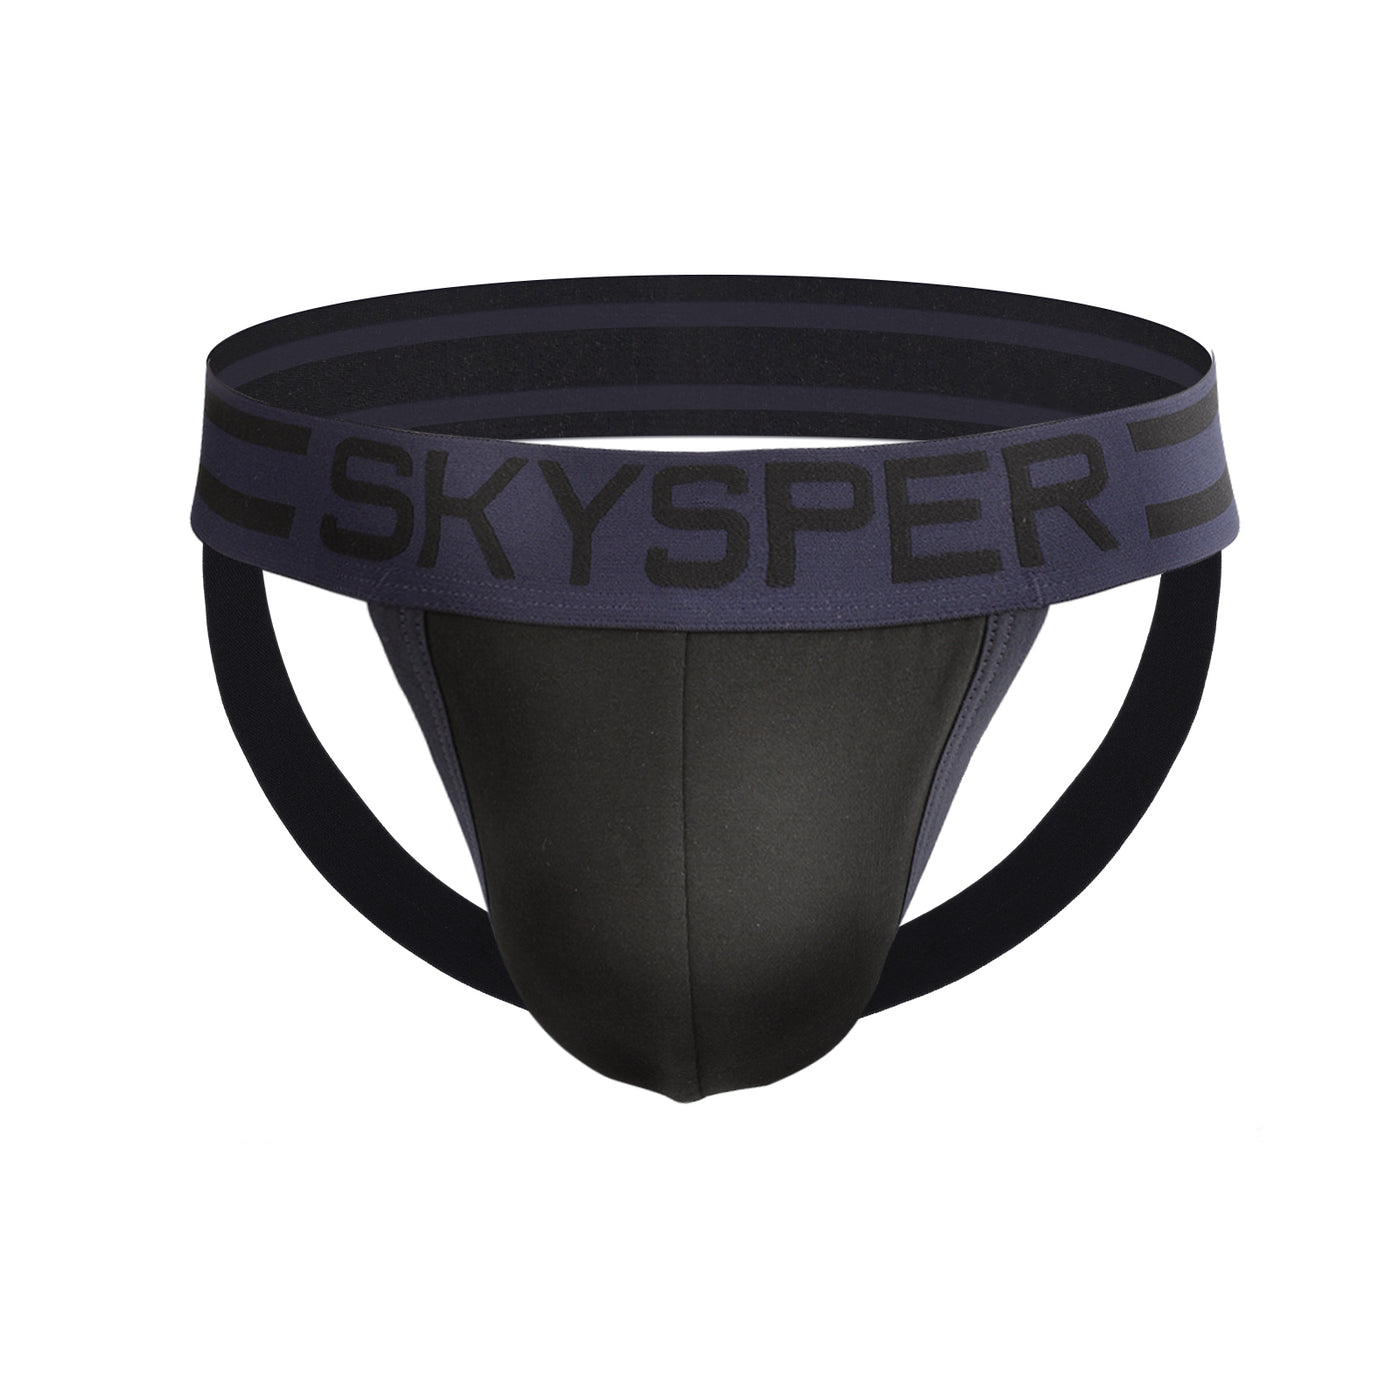 28SK - SKYSPER Men's Cotton Jockstrap Underwear Athletic Supporter